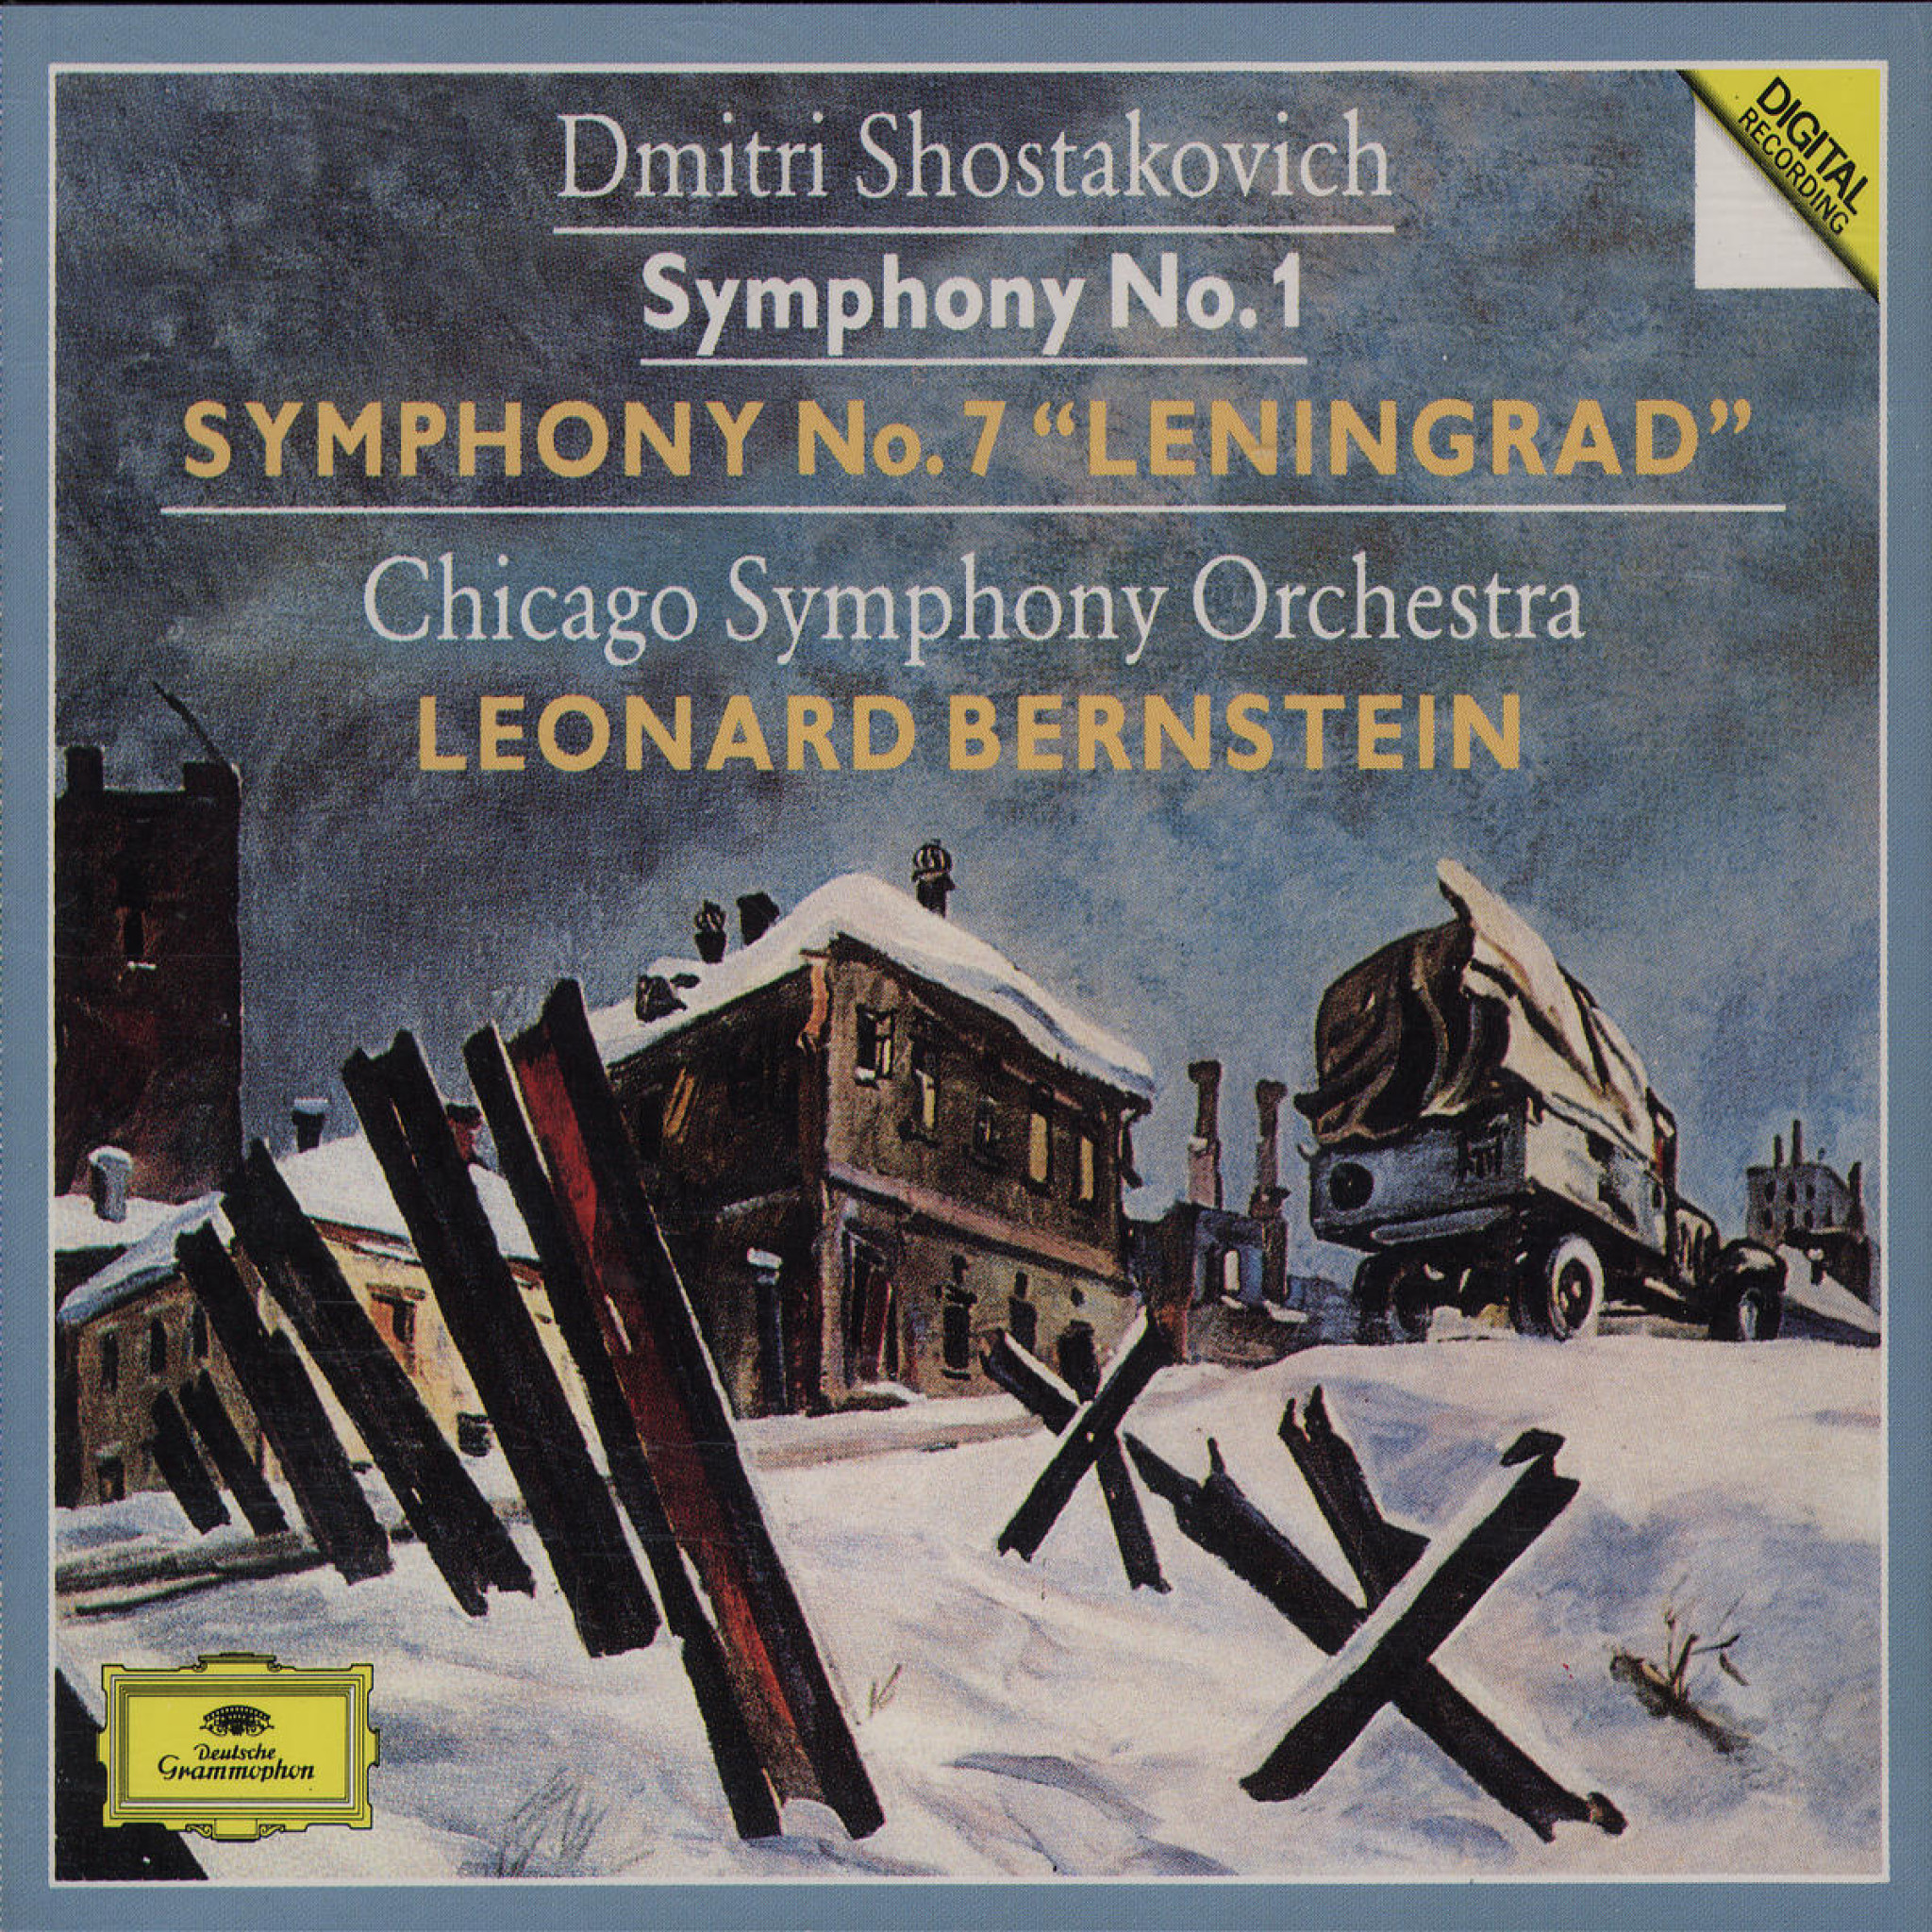 Shostakovich: Symphonies Nos.1 & 7 "Leningrad" 0028942763227